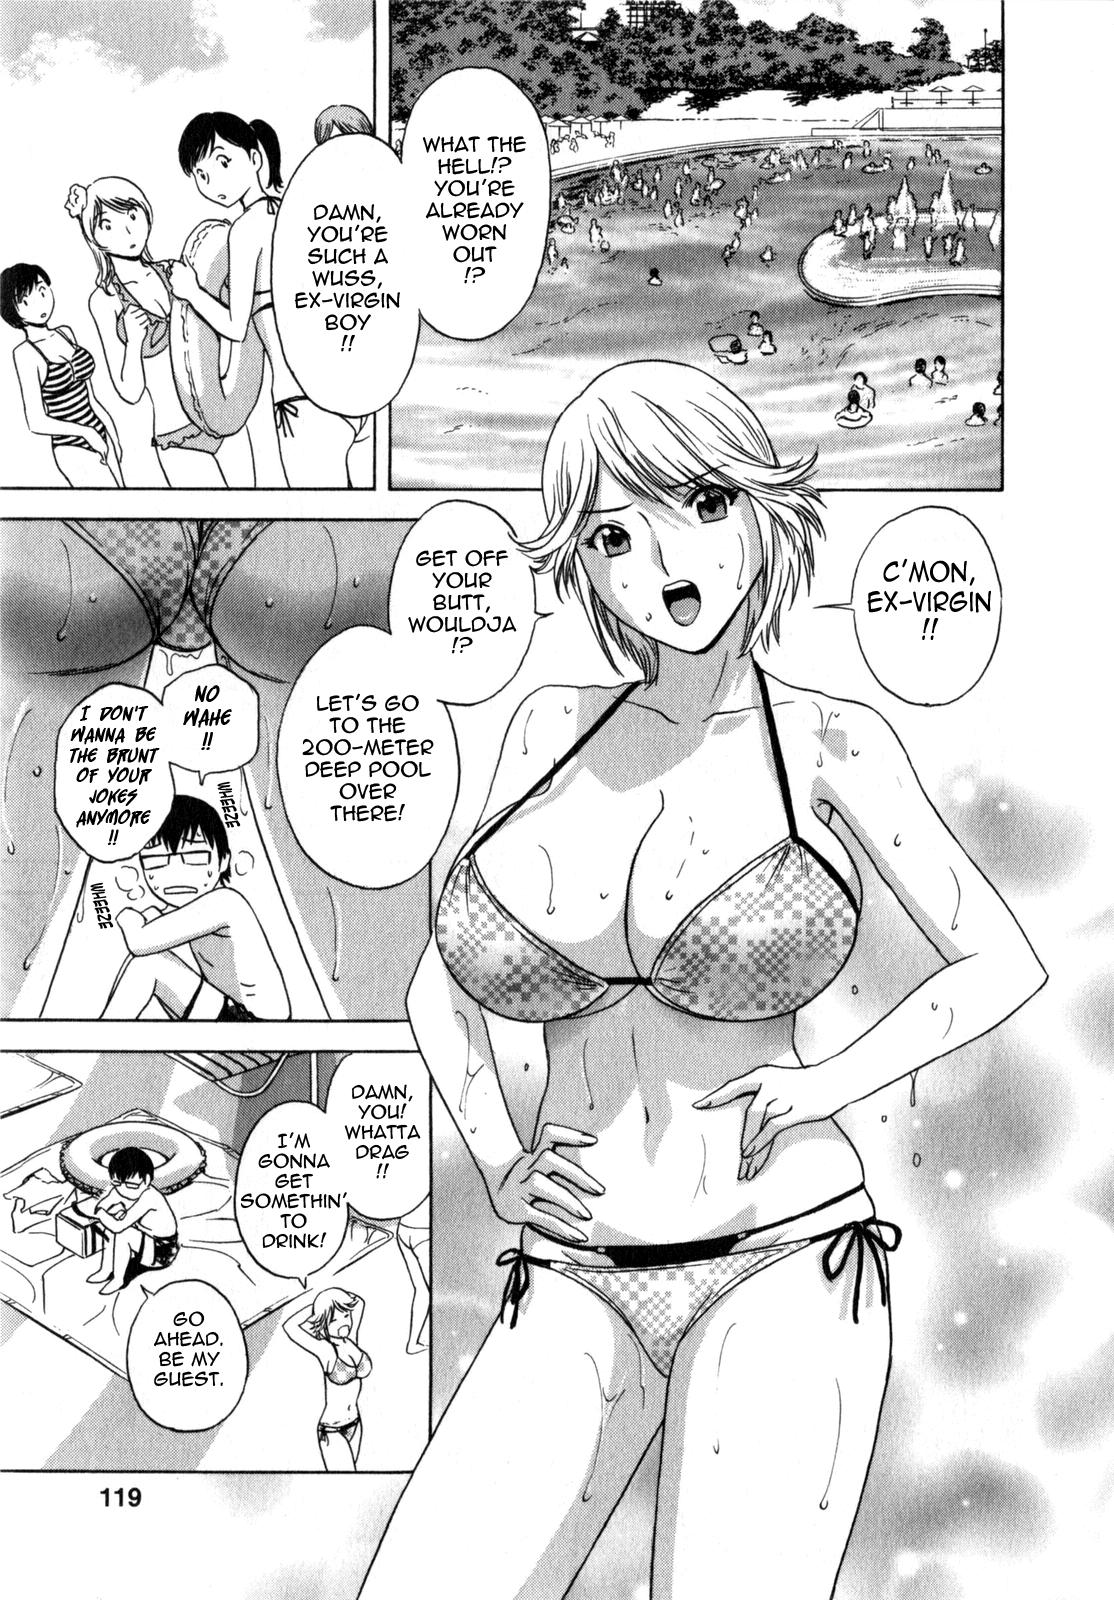 [Hidemaru] Life with Married Women Just Like a Manga 1 - Ch. 1-8 [English] {Tadanohito} 125